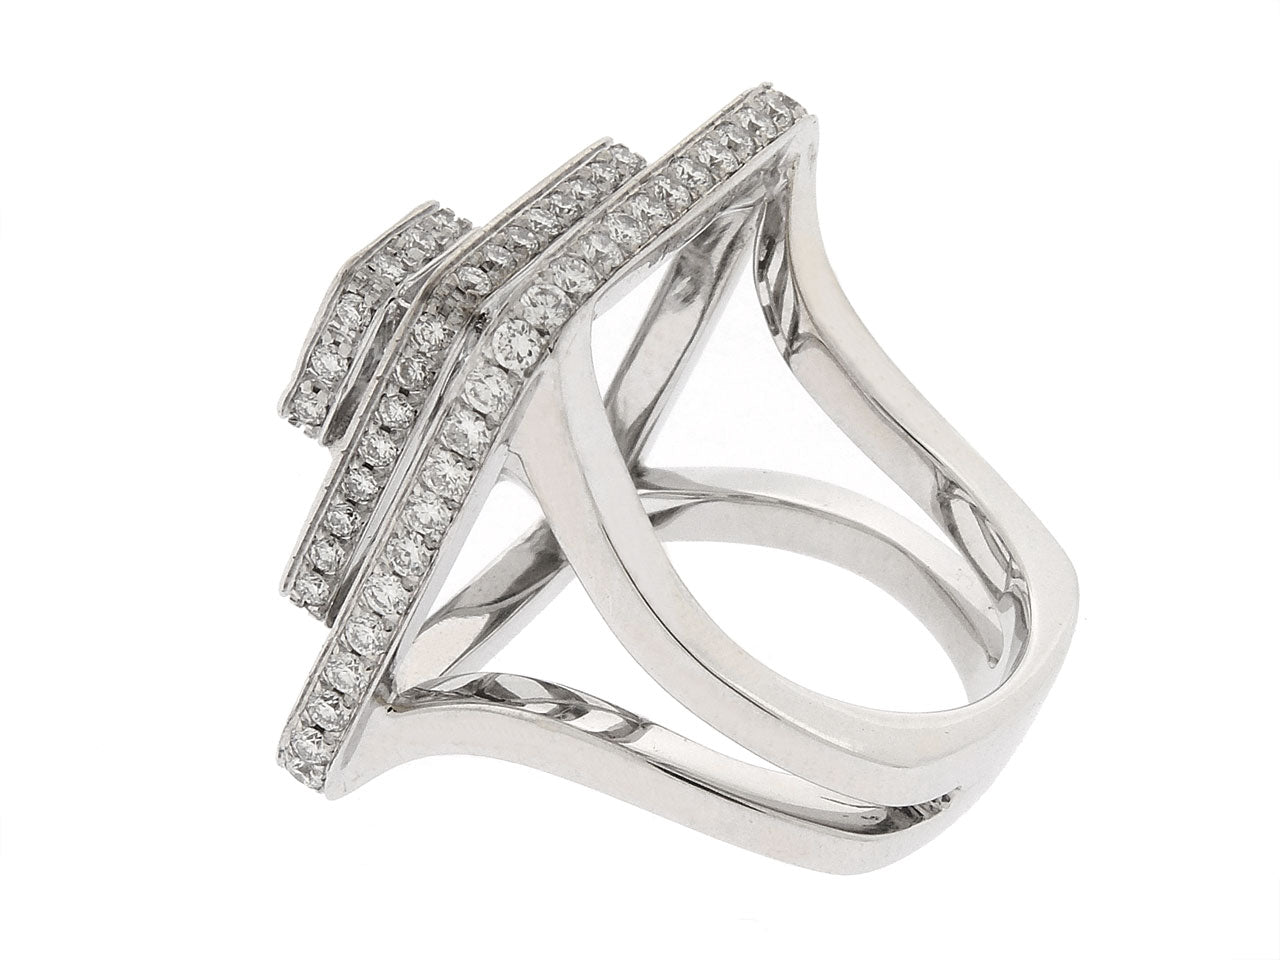 Mimi So for Forevermark Pyramid Diamond Ring in 18K